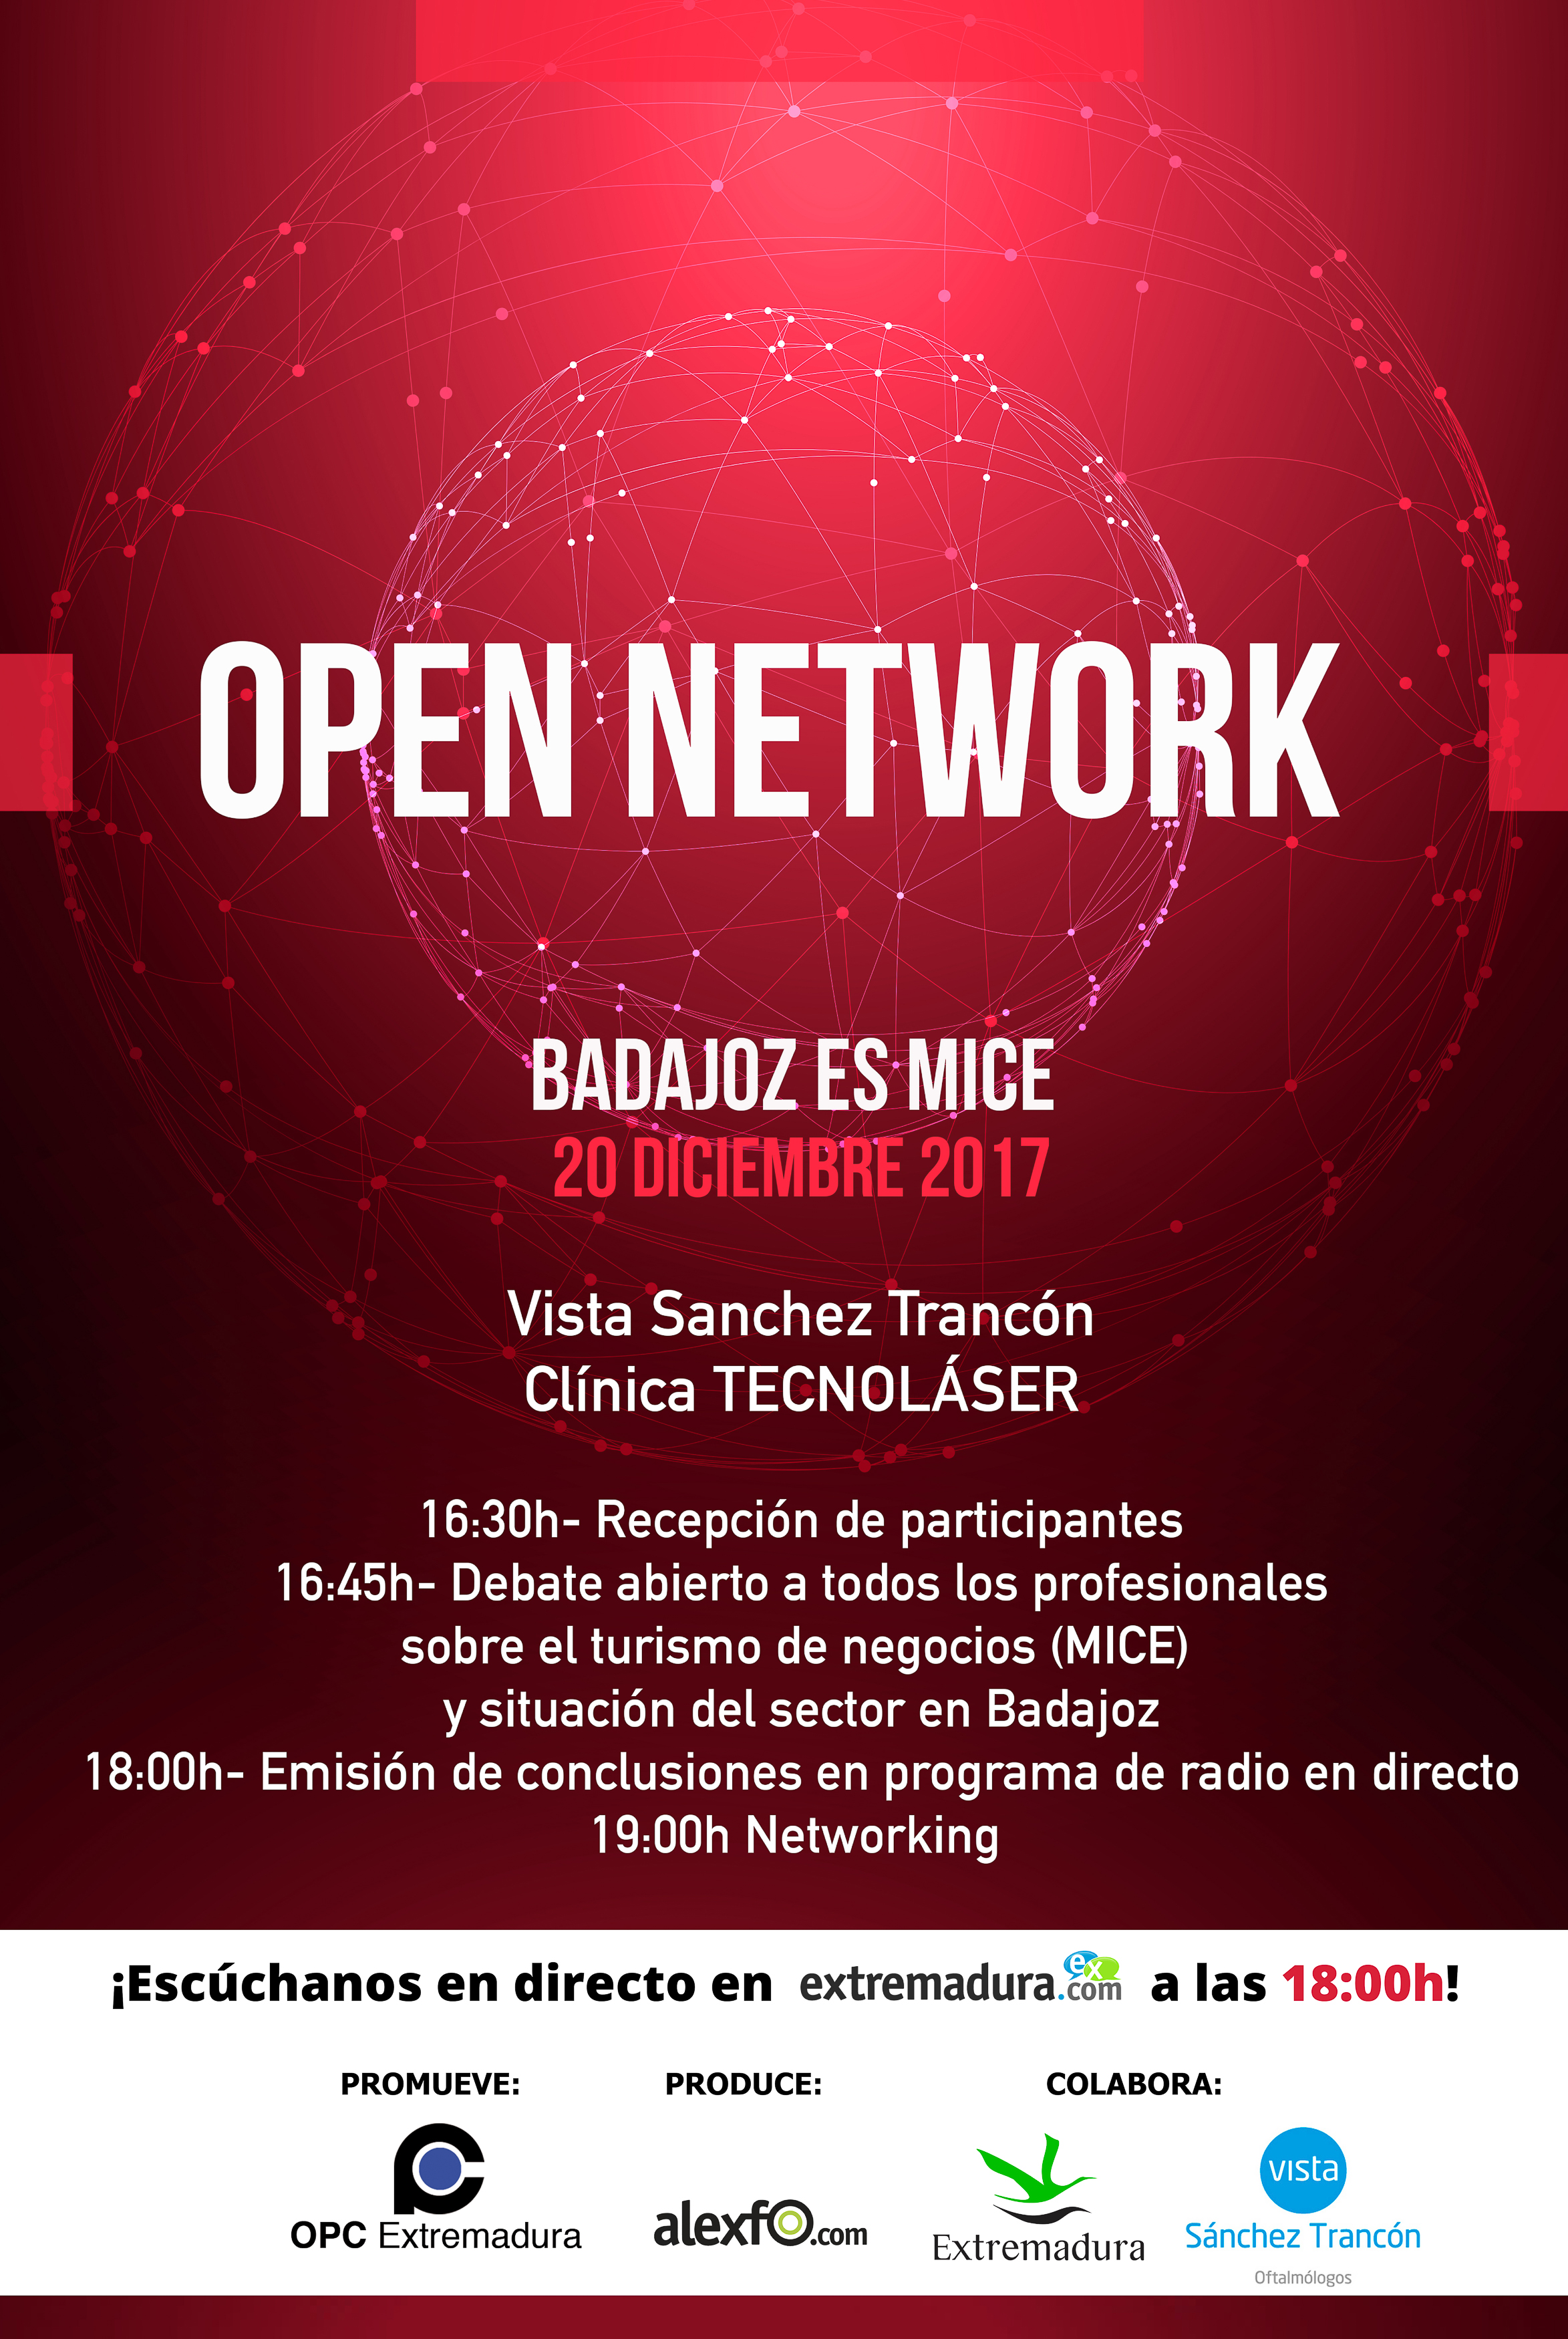 Open network badajoz es mice 56